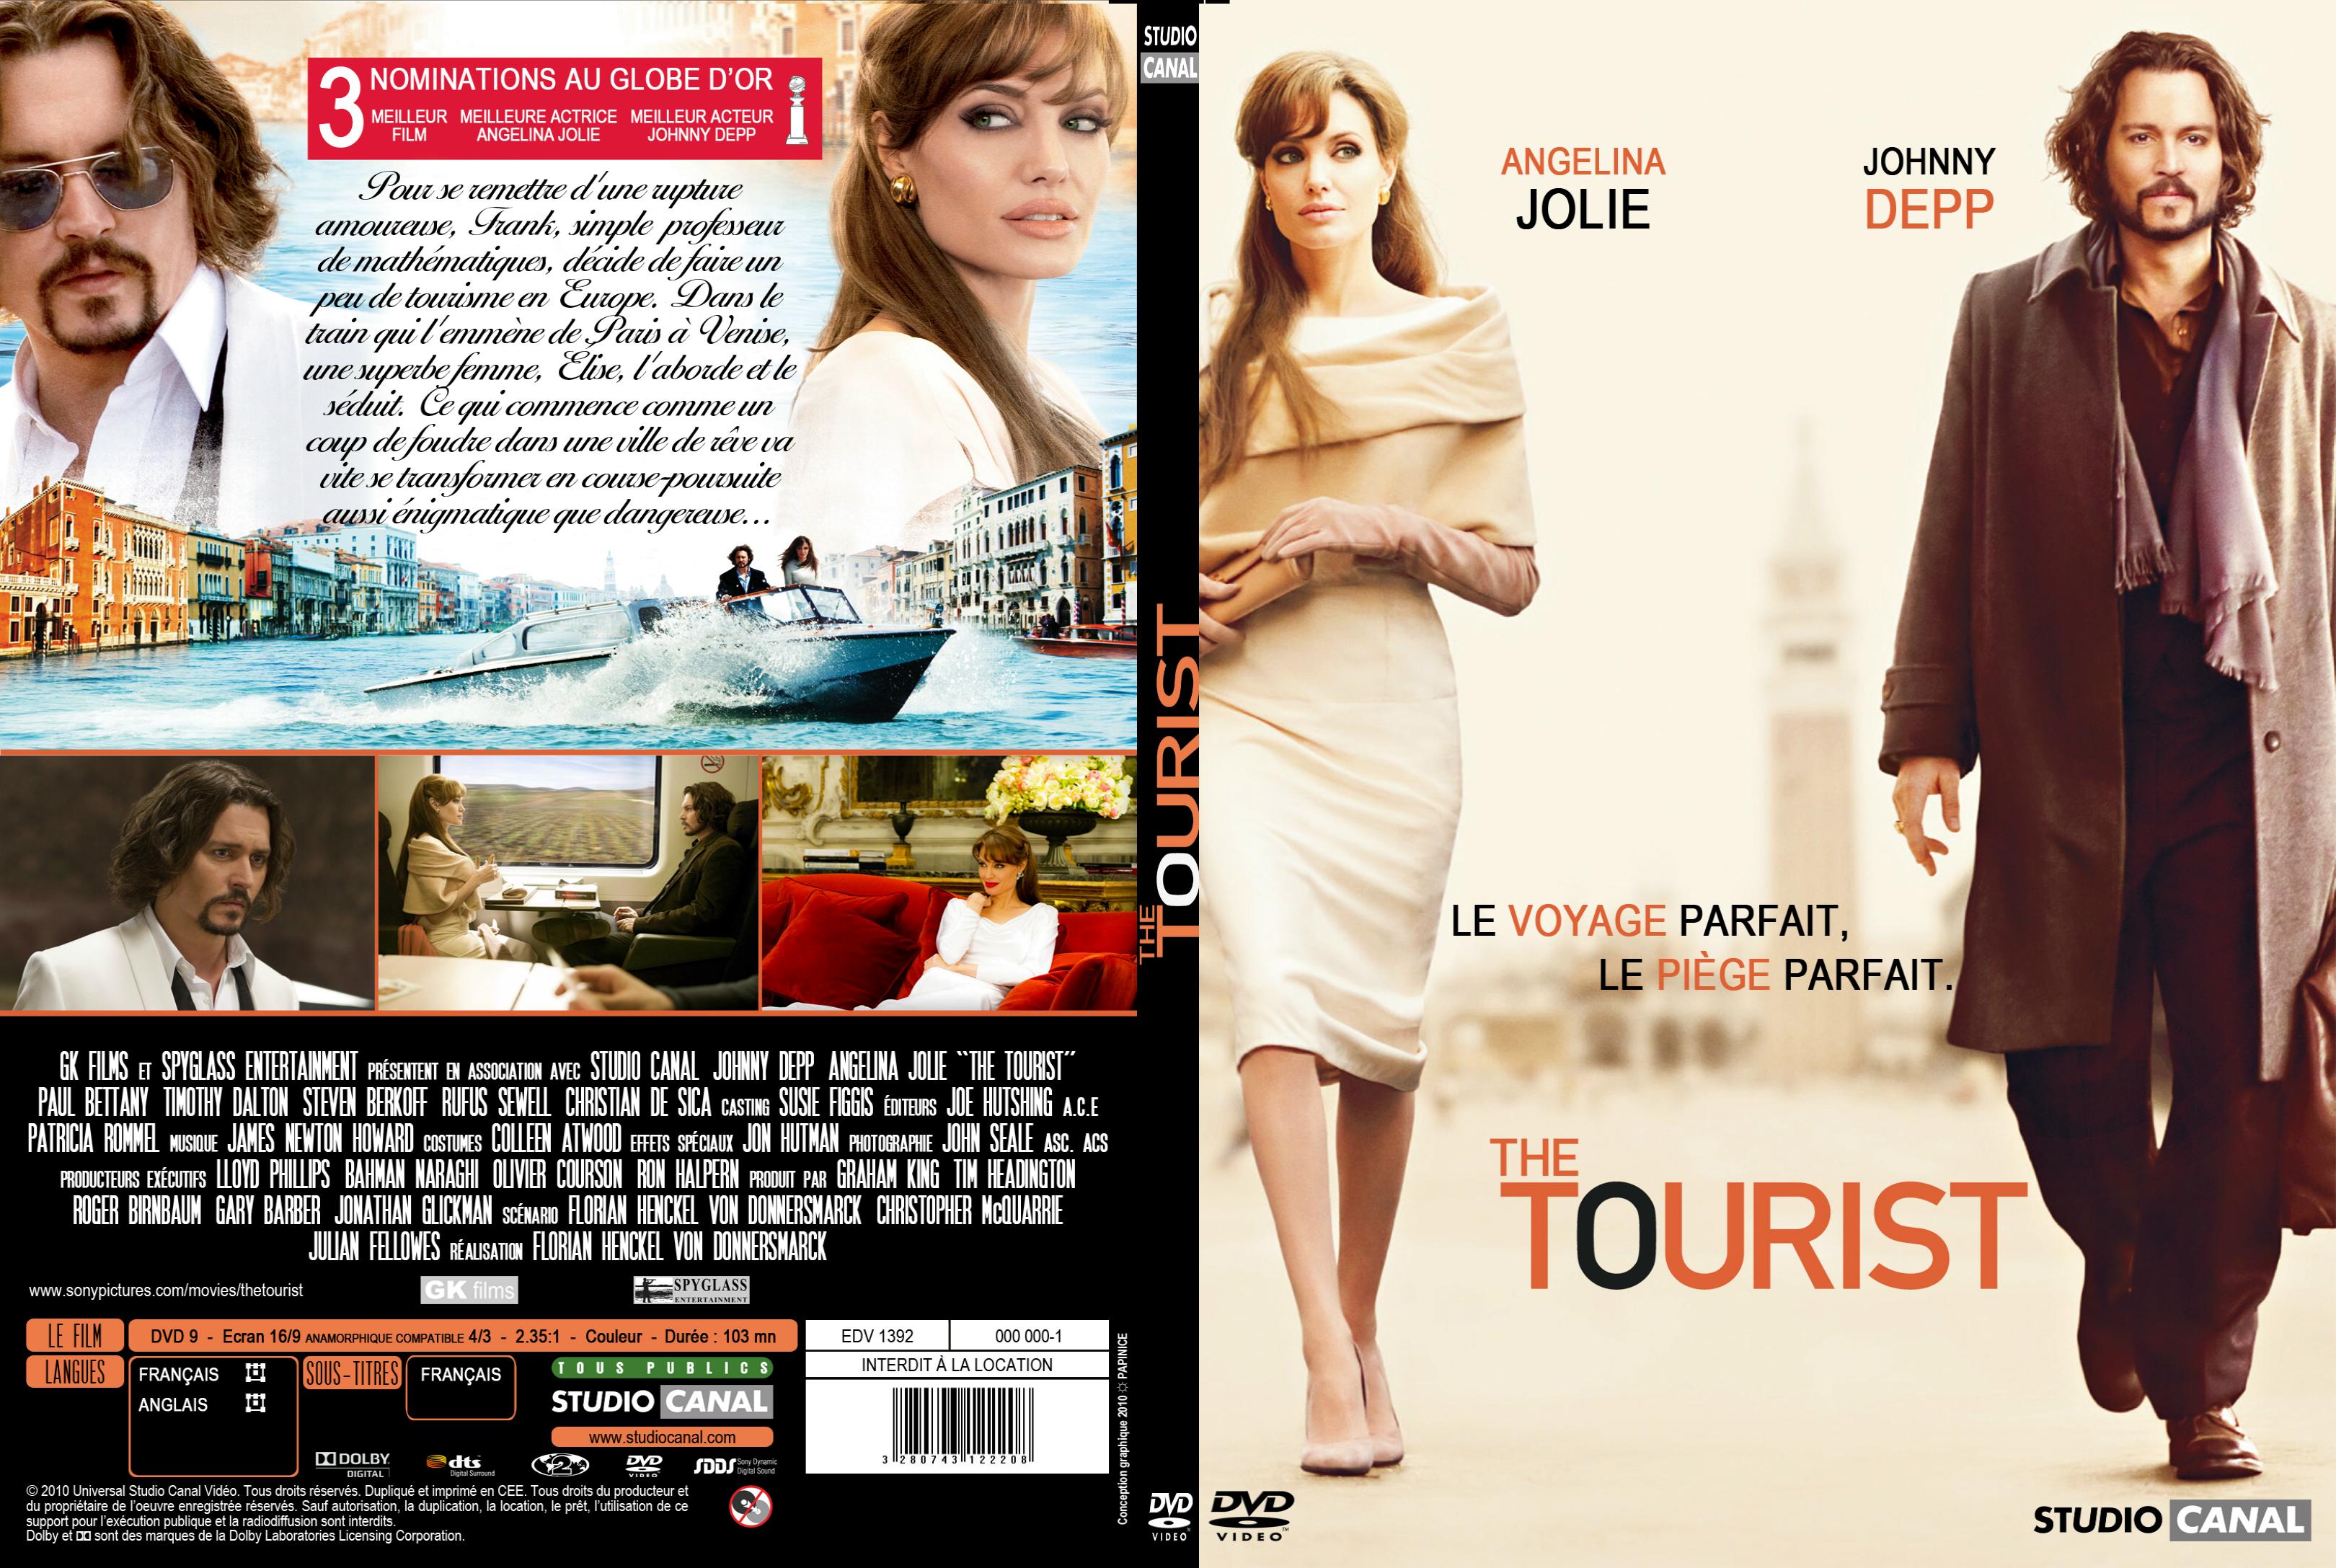 Jaquette DVD The tourist custom - SLIM